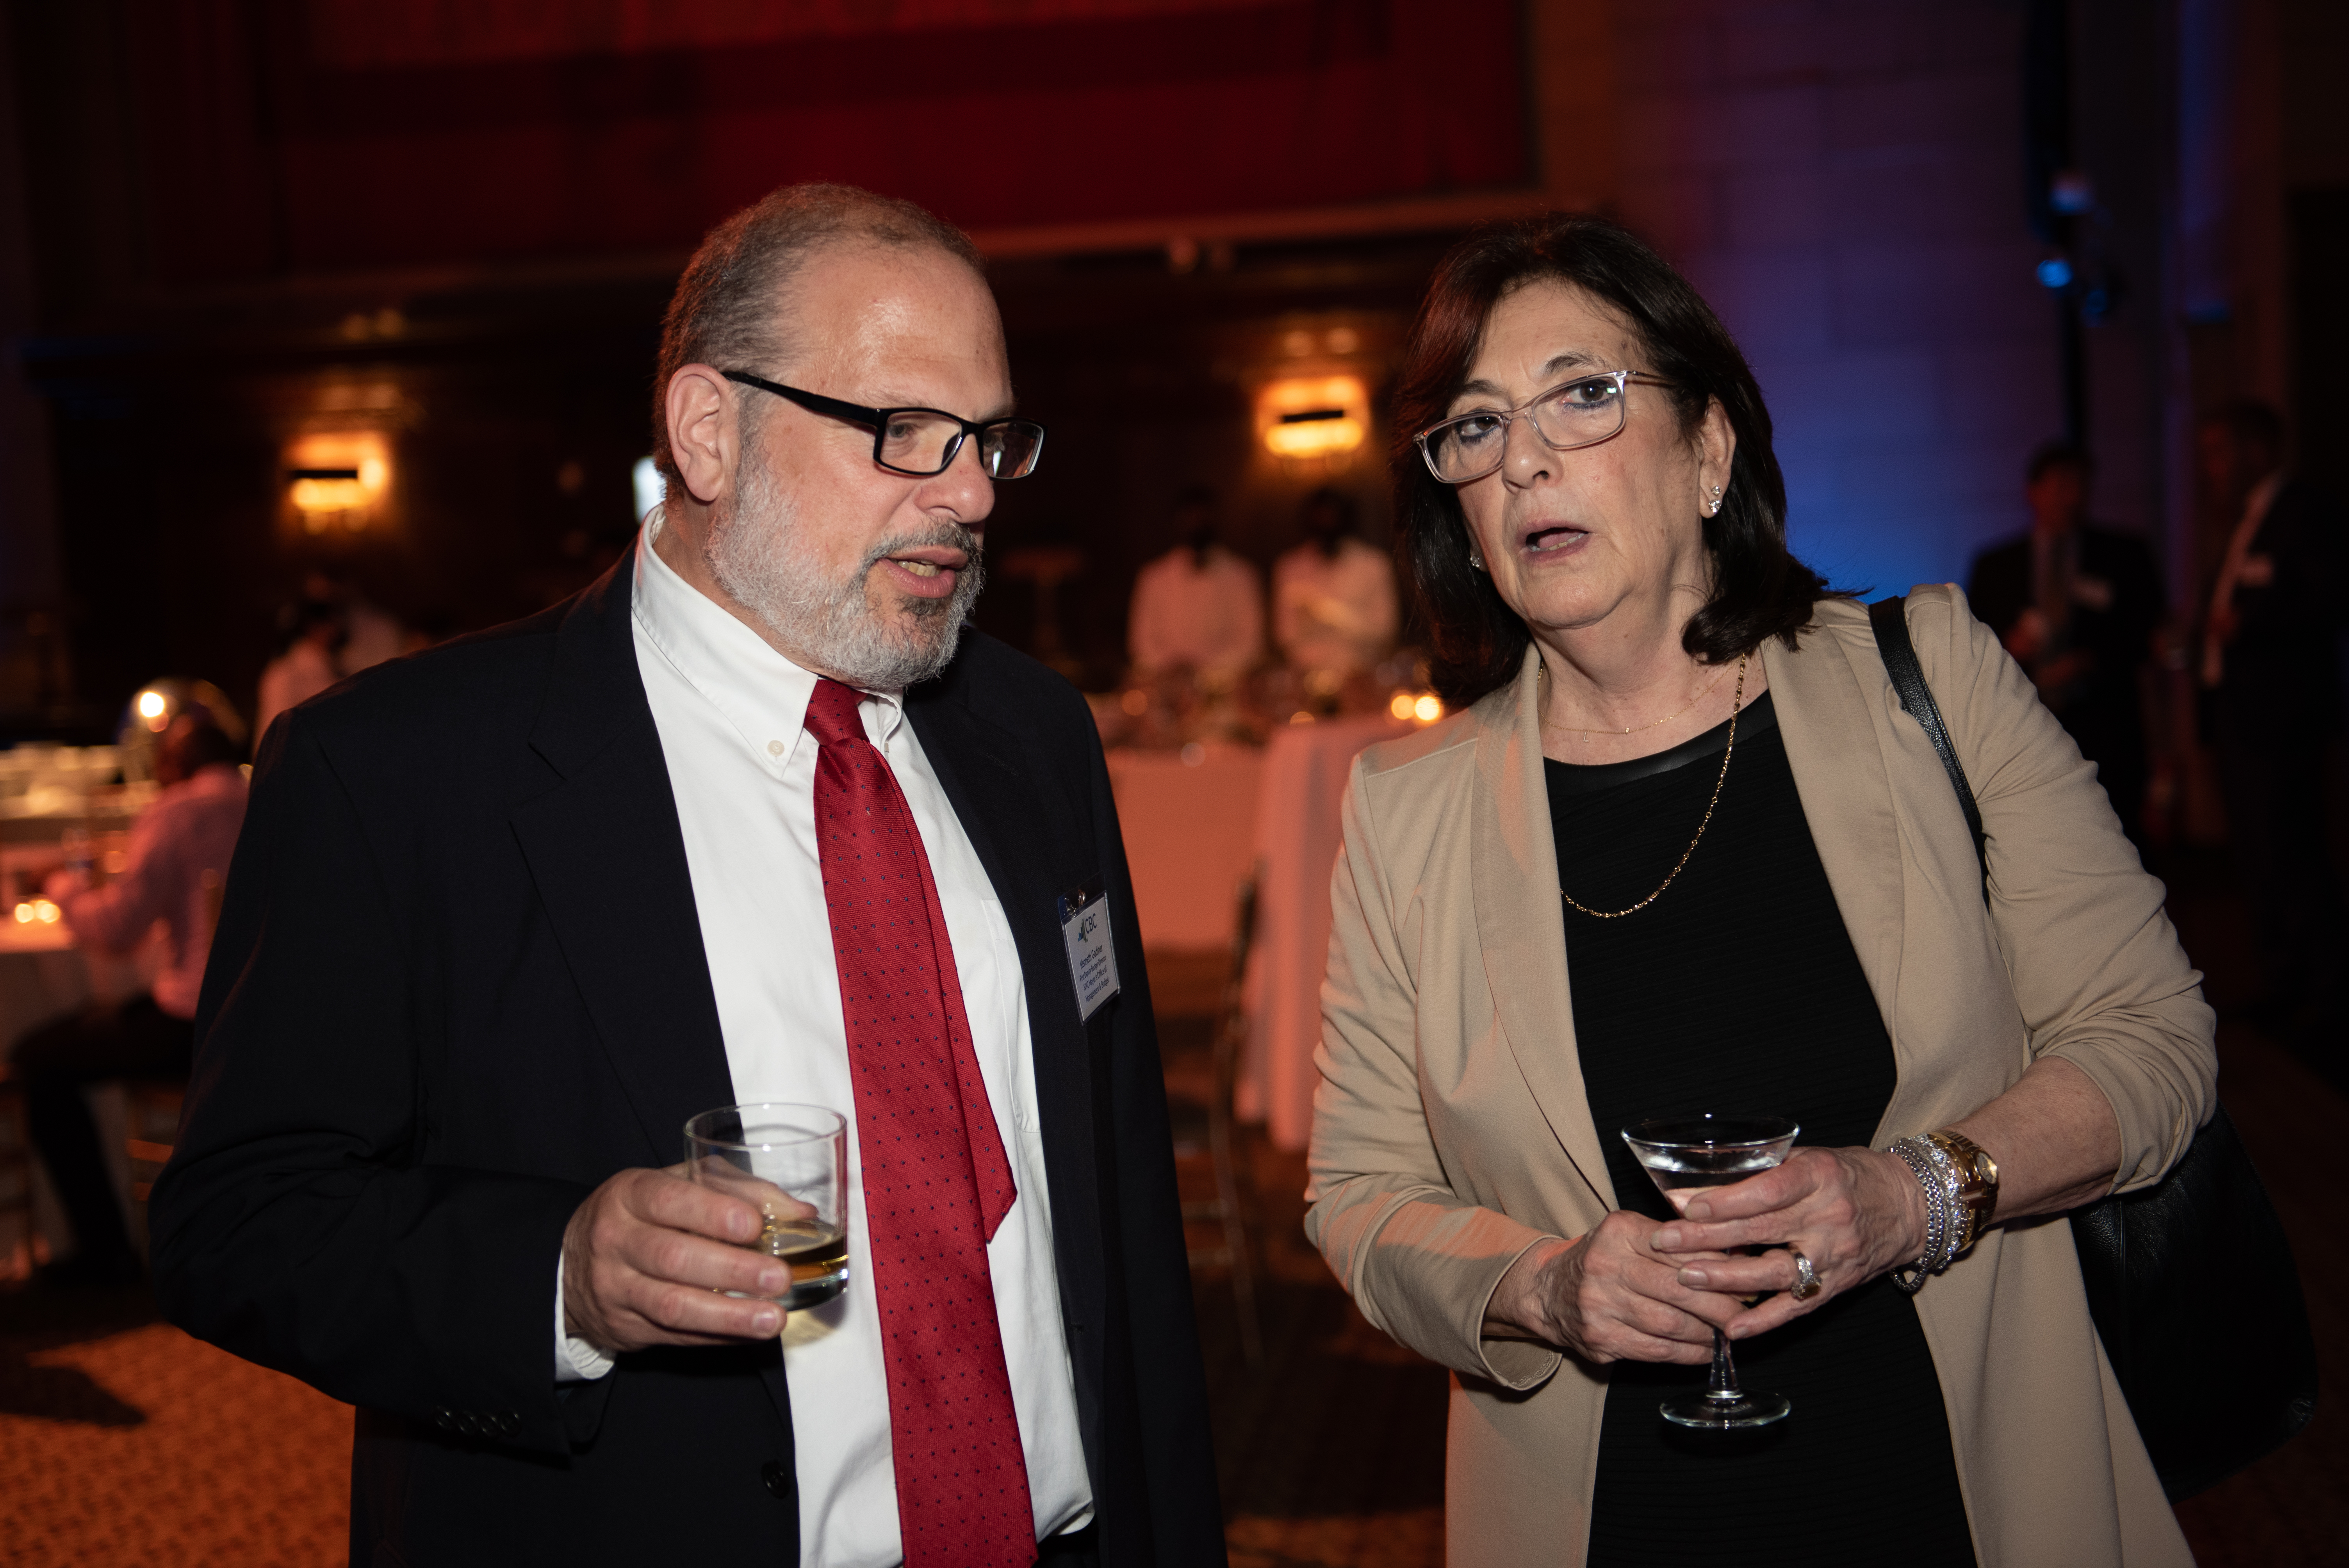 Kenneth Godiner and First Deputy Mayor Lorraine Grillo